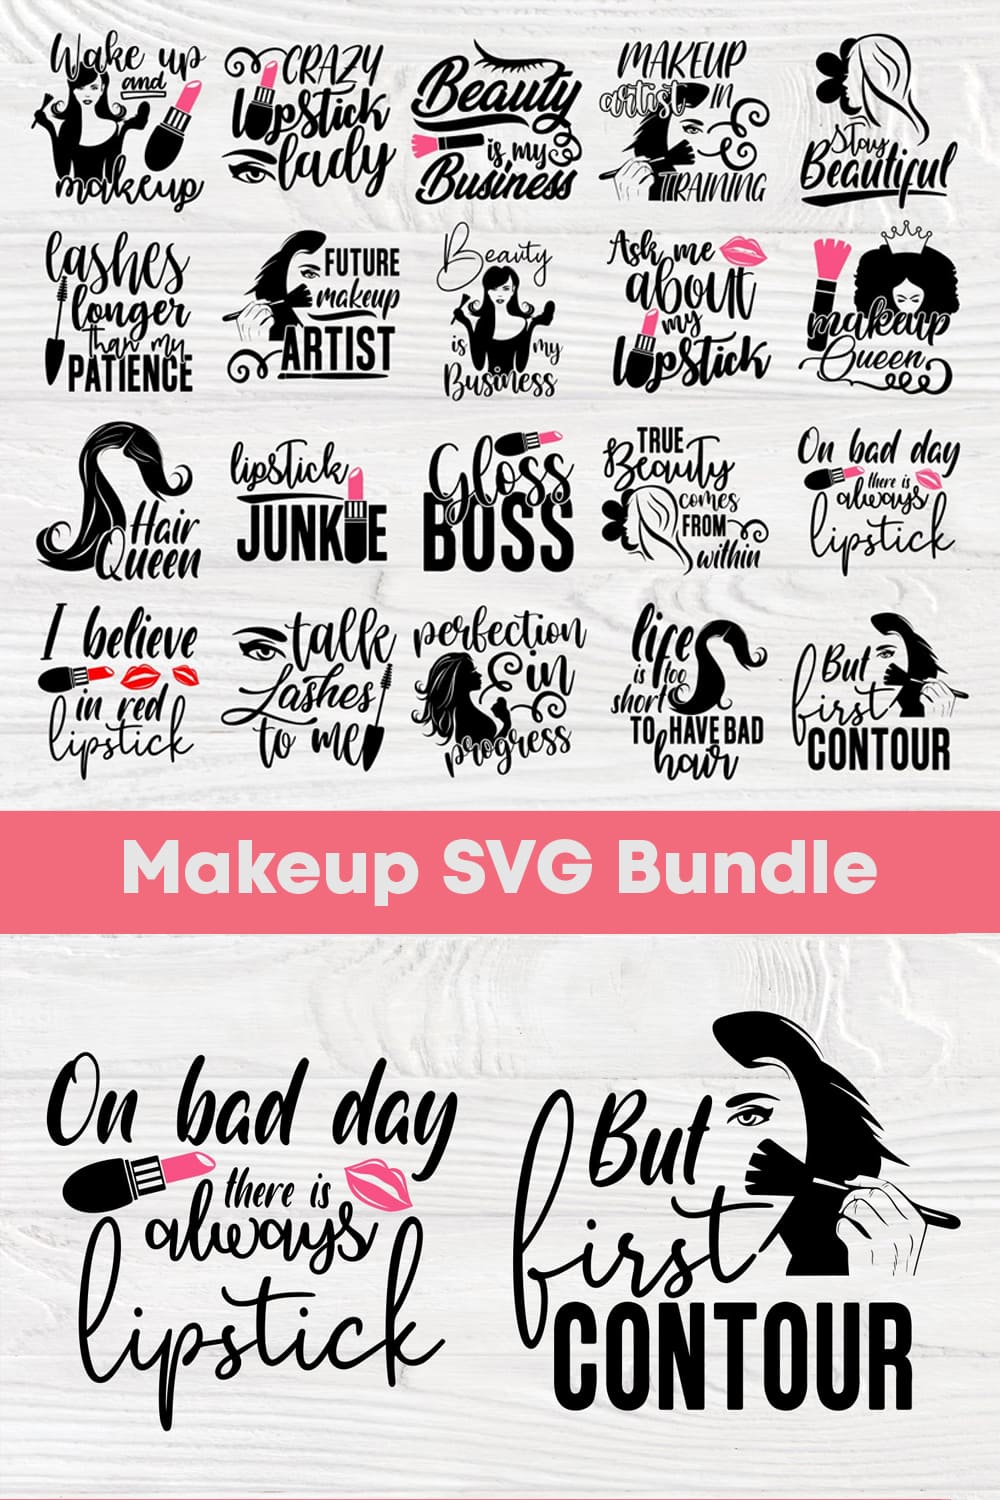 Makeup SVG Bundle pinterest image.